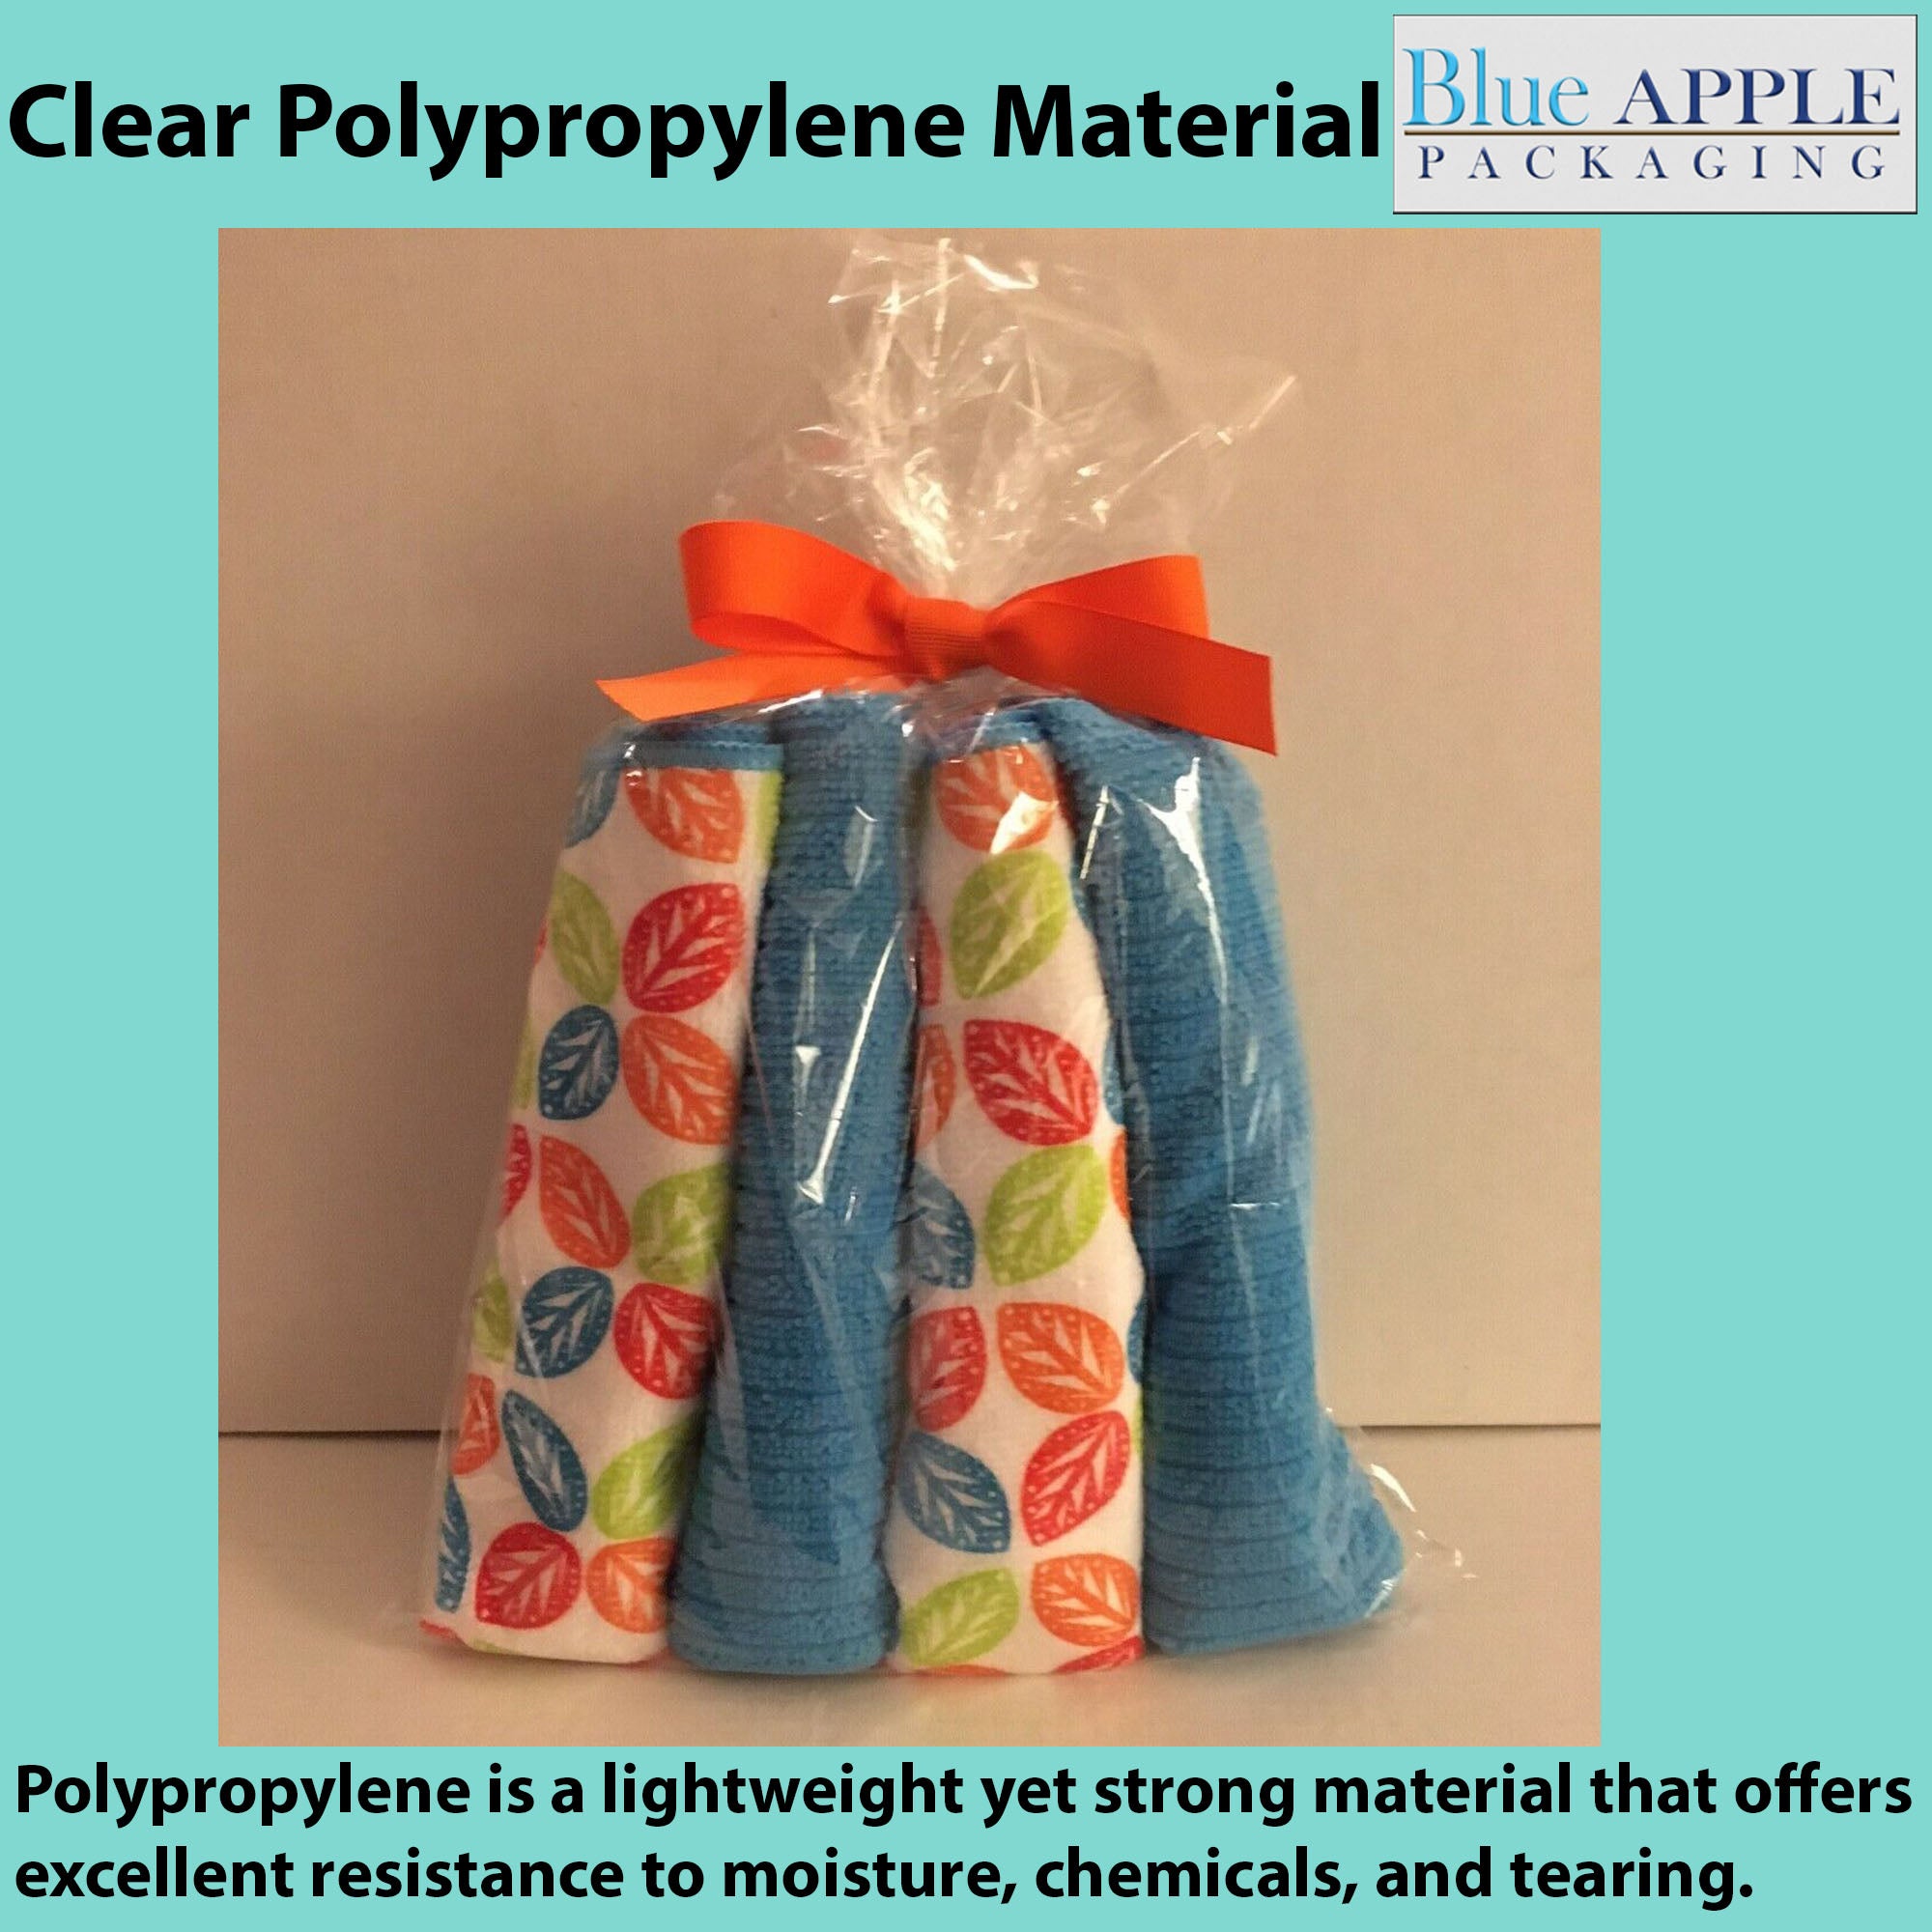 Polypropylene Bags 1.5 Mil 4"X6" Clear Flat Open Top